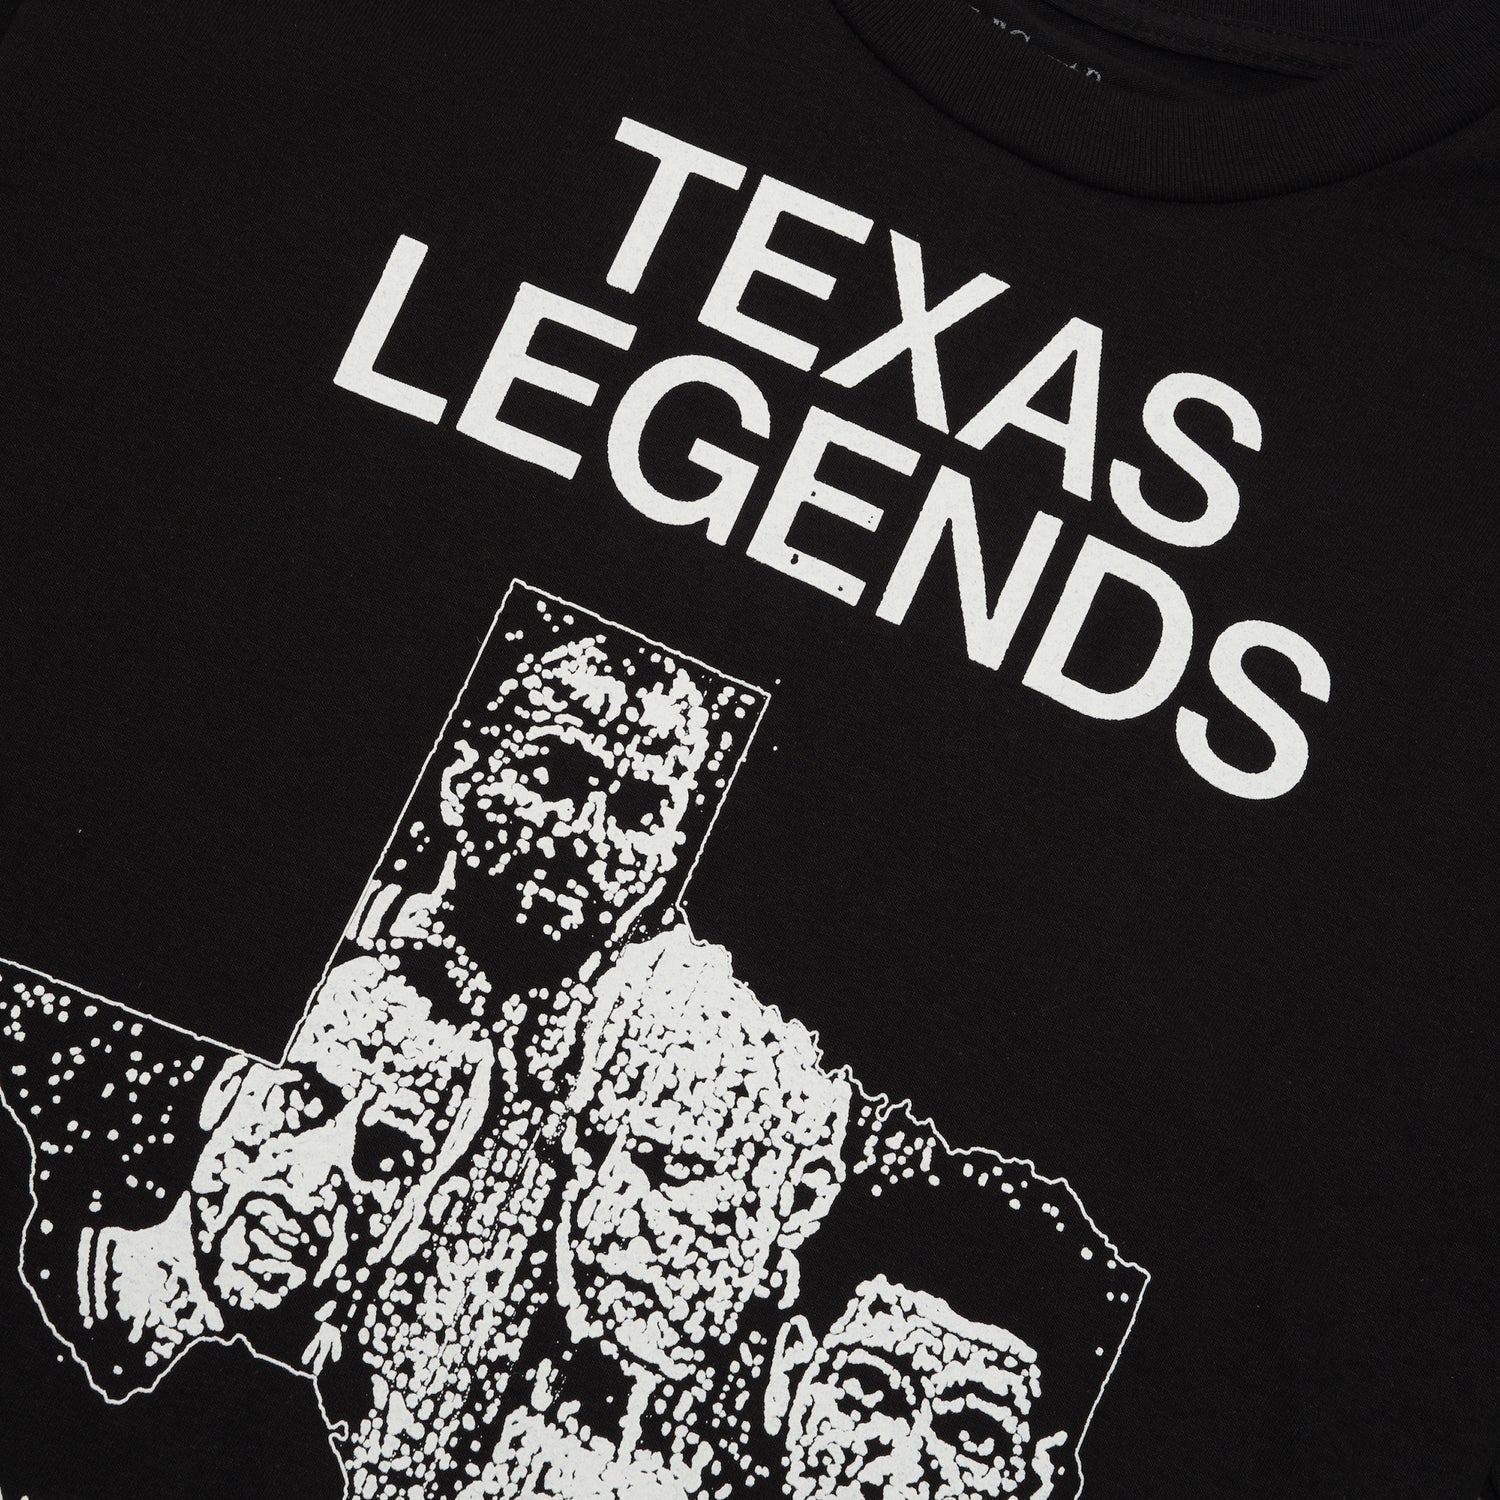 Texas Legends Tee, Black